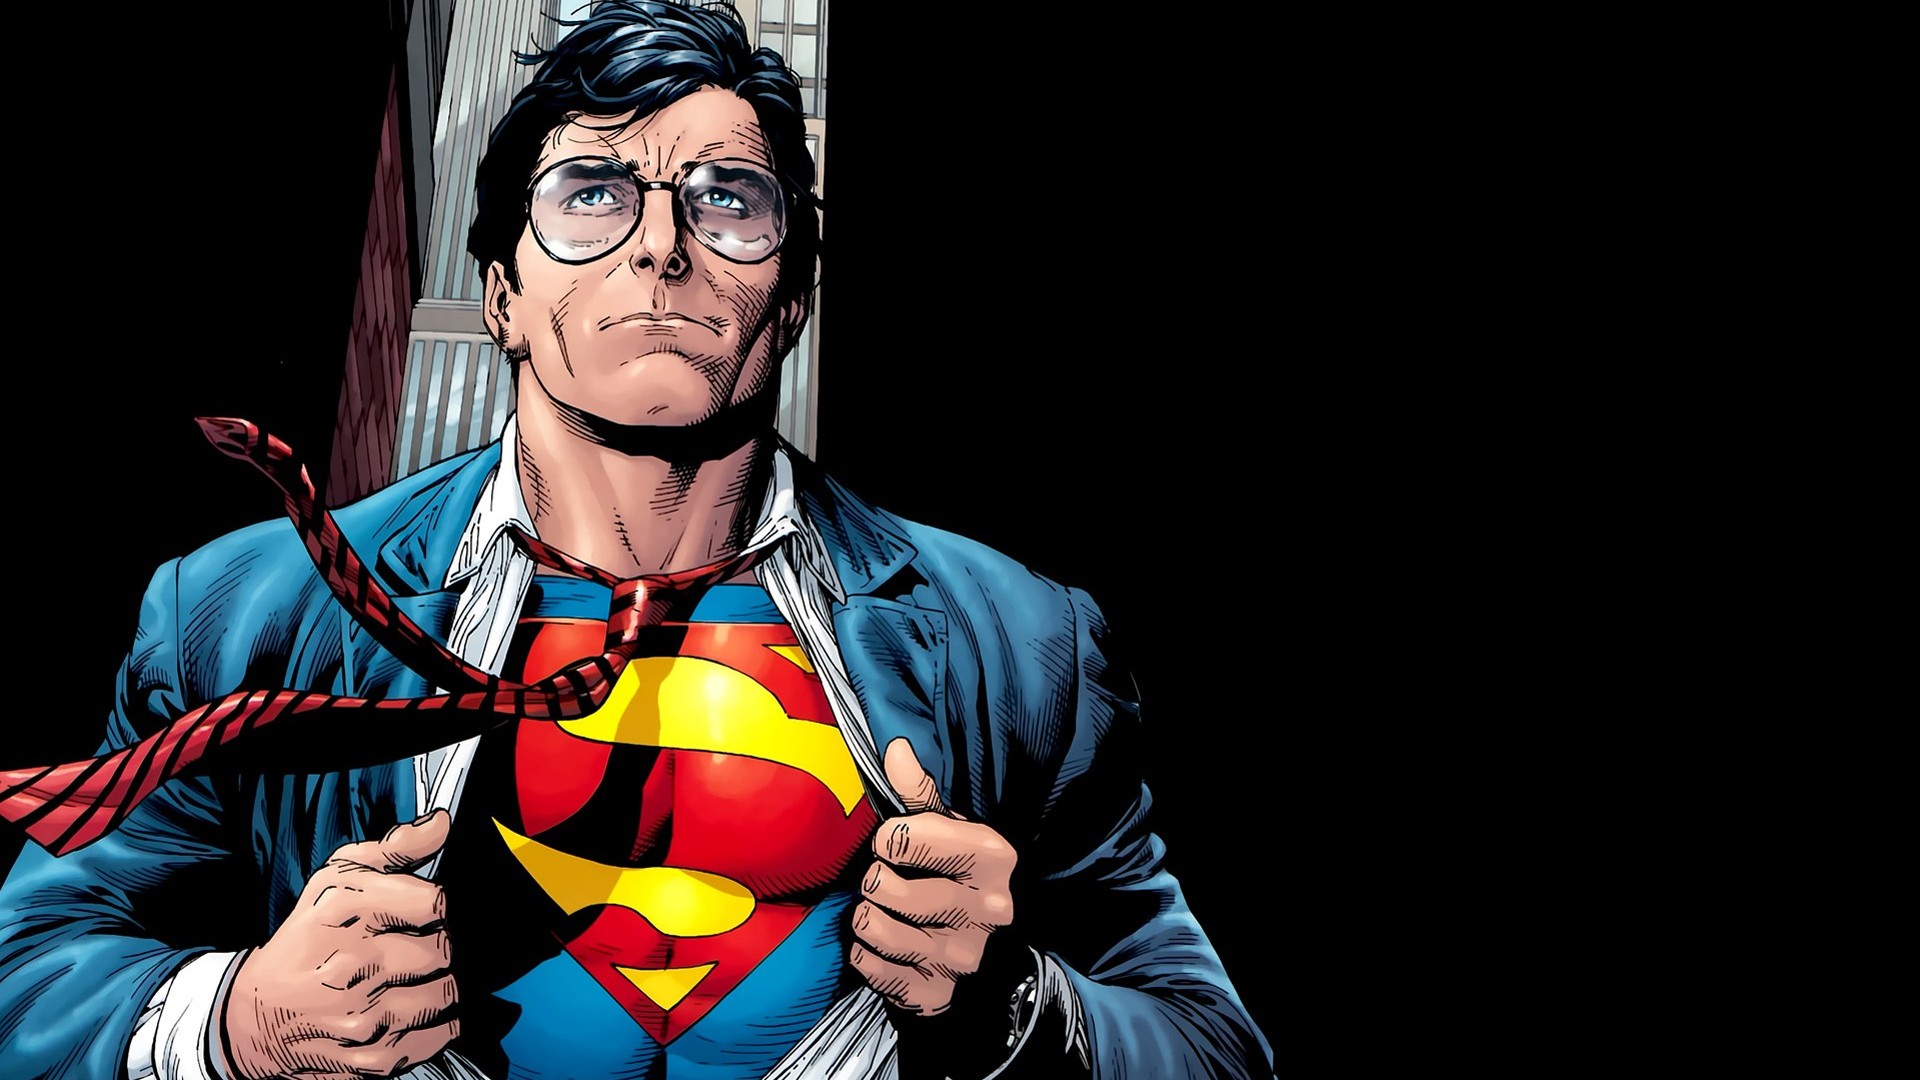 superman-comic-hd-wallpaper-1920x1080-31090.jpg